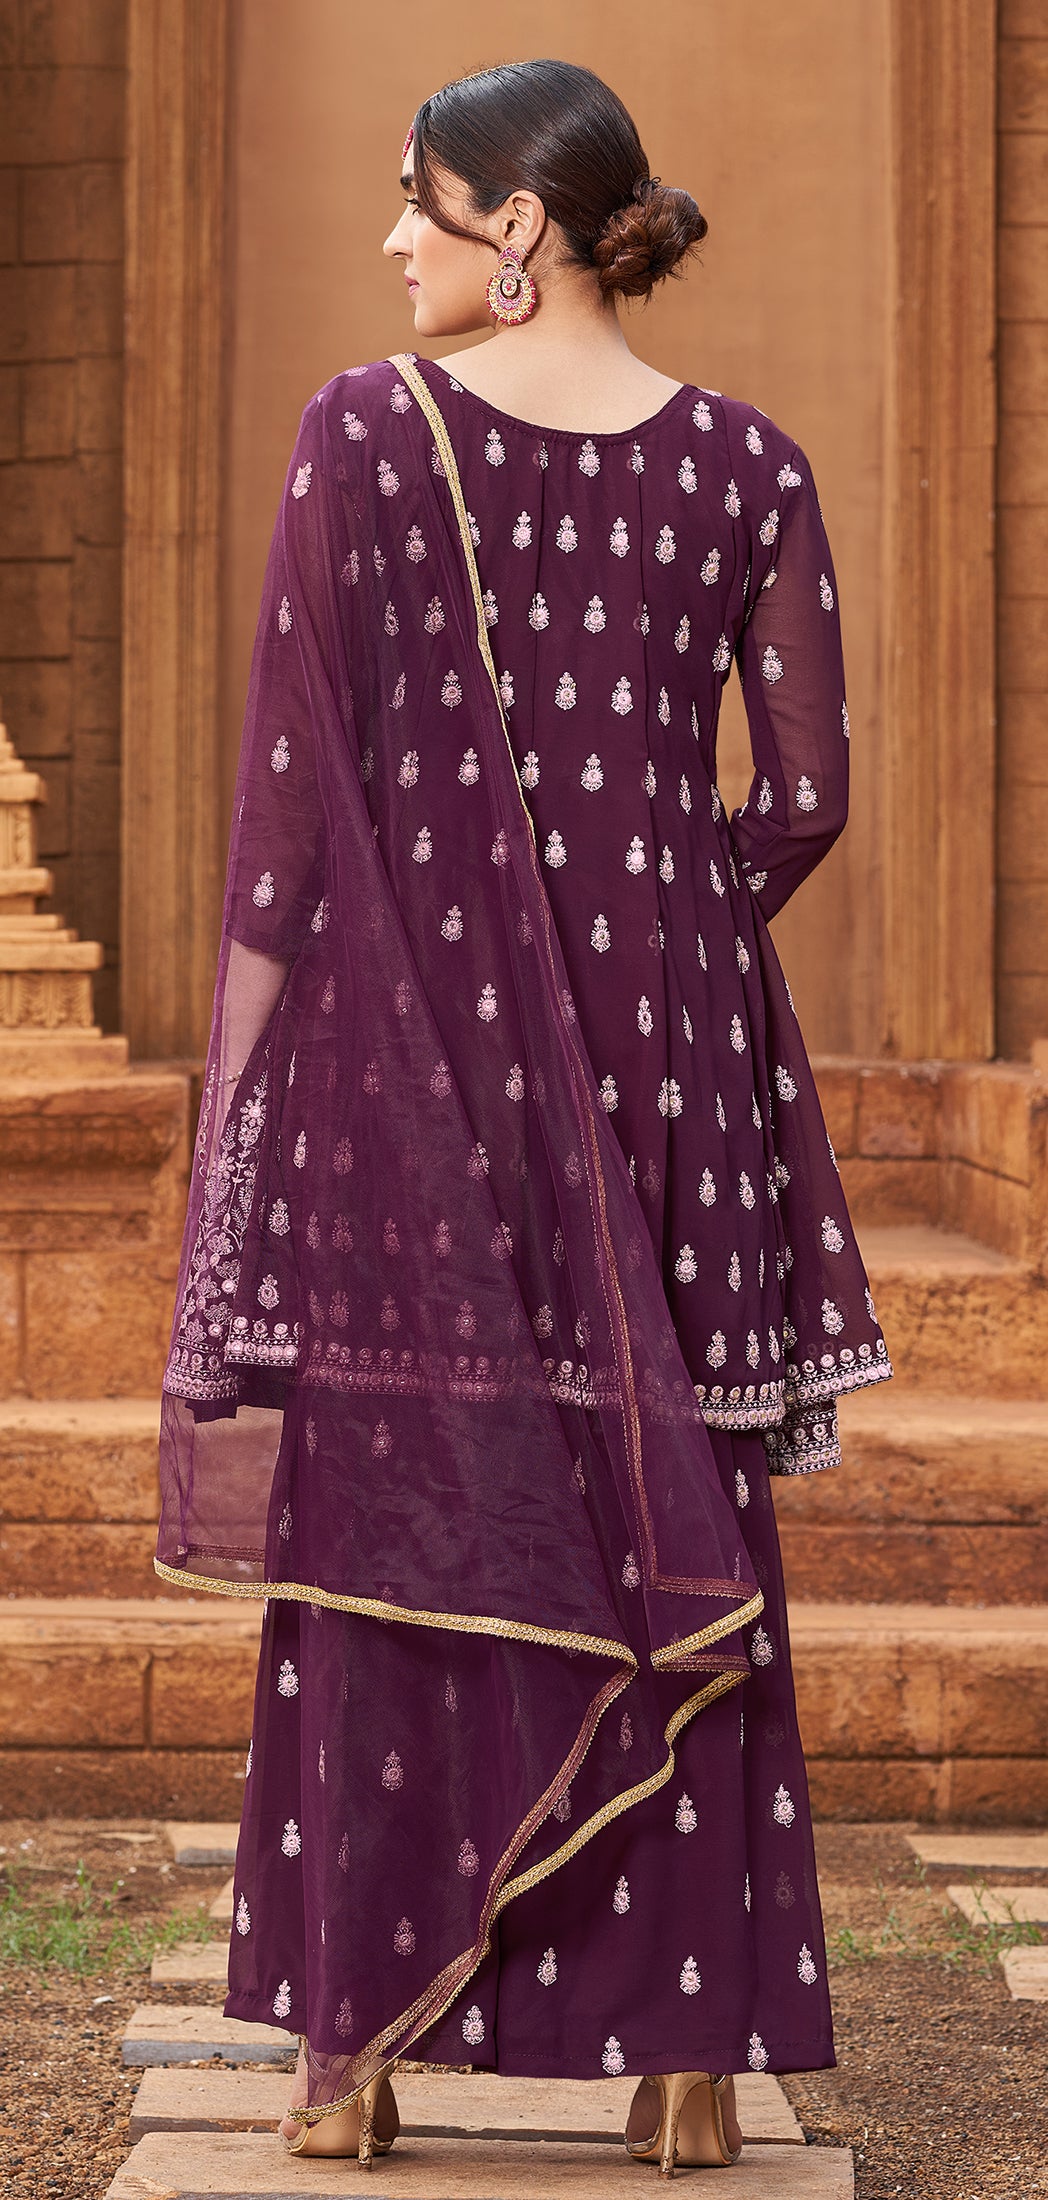 Buy Sharara Set in Plum Wine - Beautifully Embroidered Sharara Suit